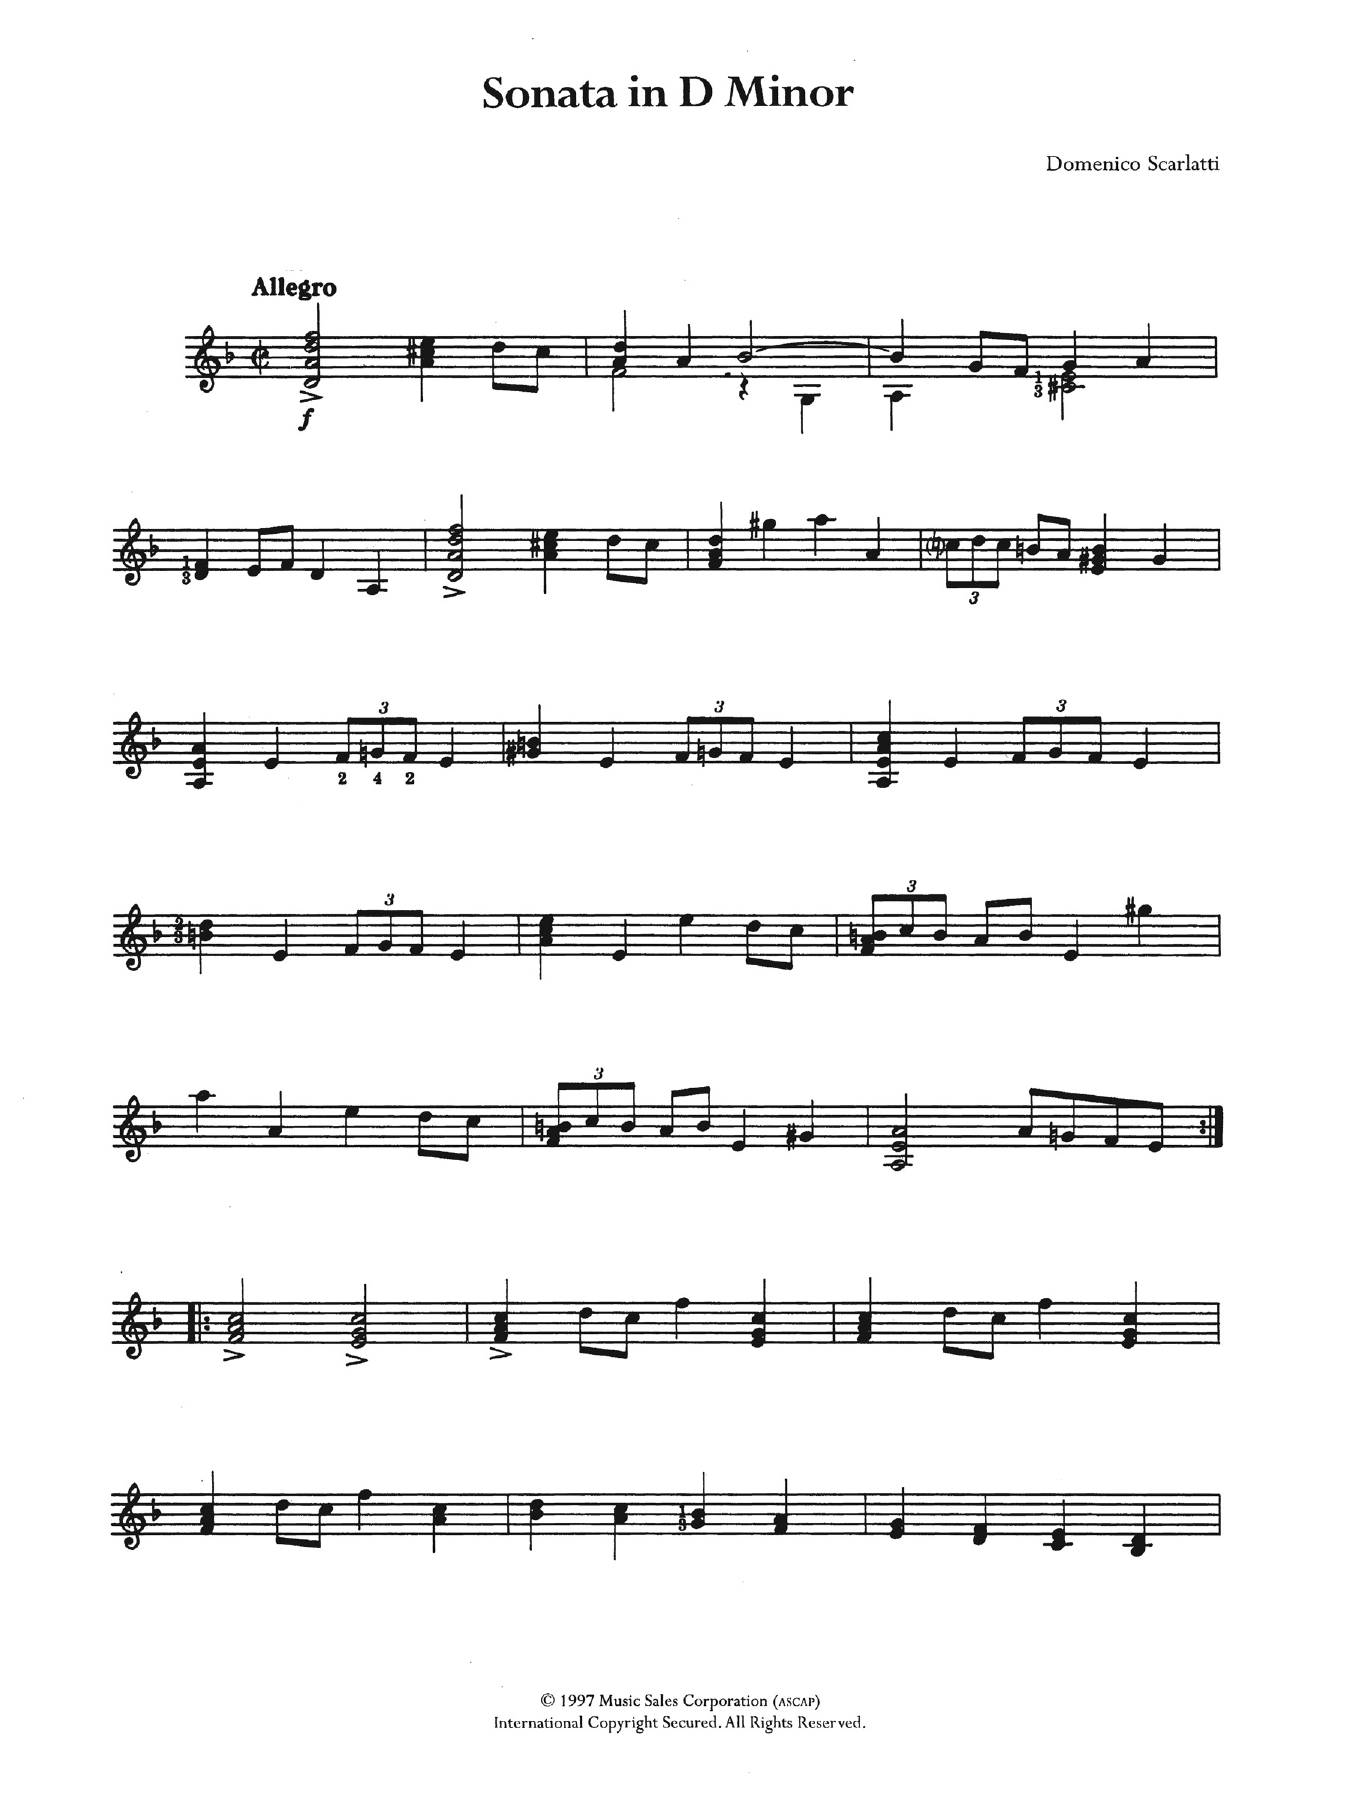 Download Domenico Scarlatti Sonata In D Minor Sheet Music and learn how to play Guitar PDF digital score in minutes